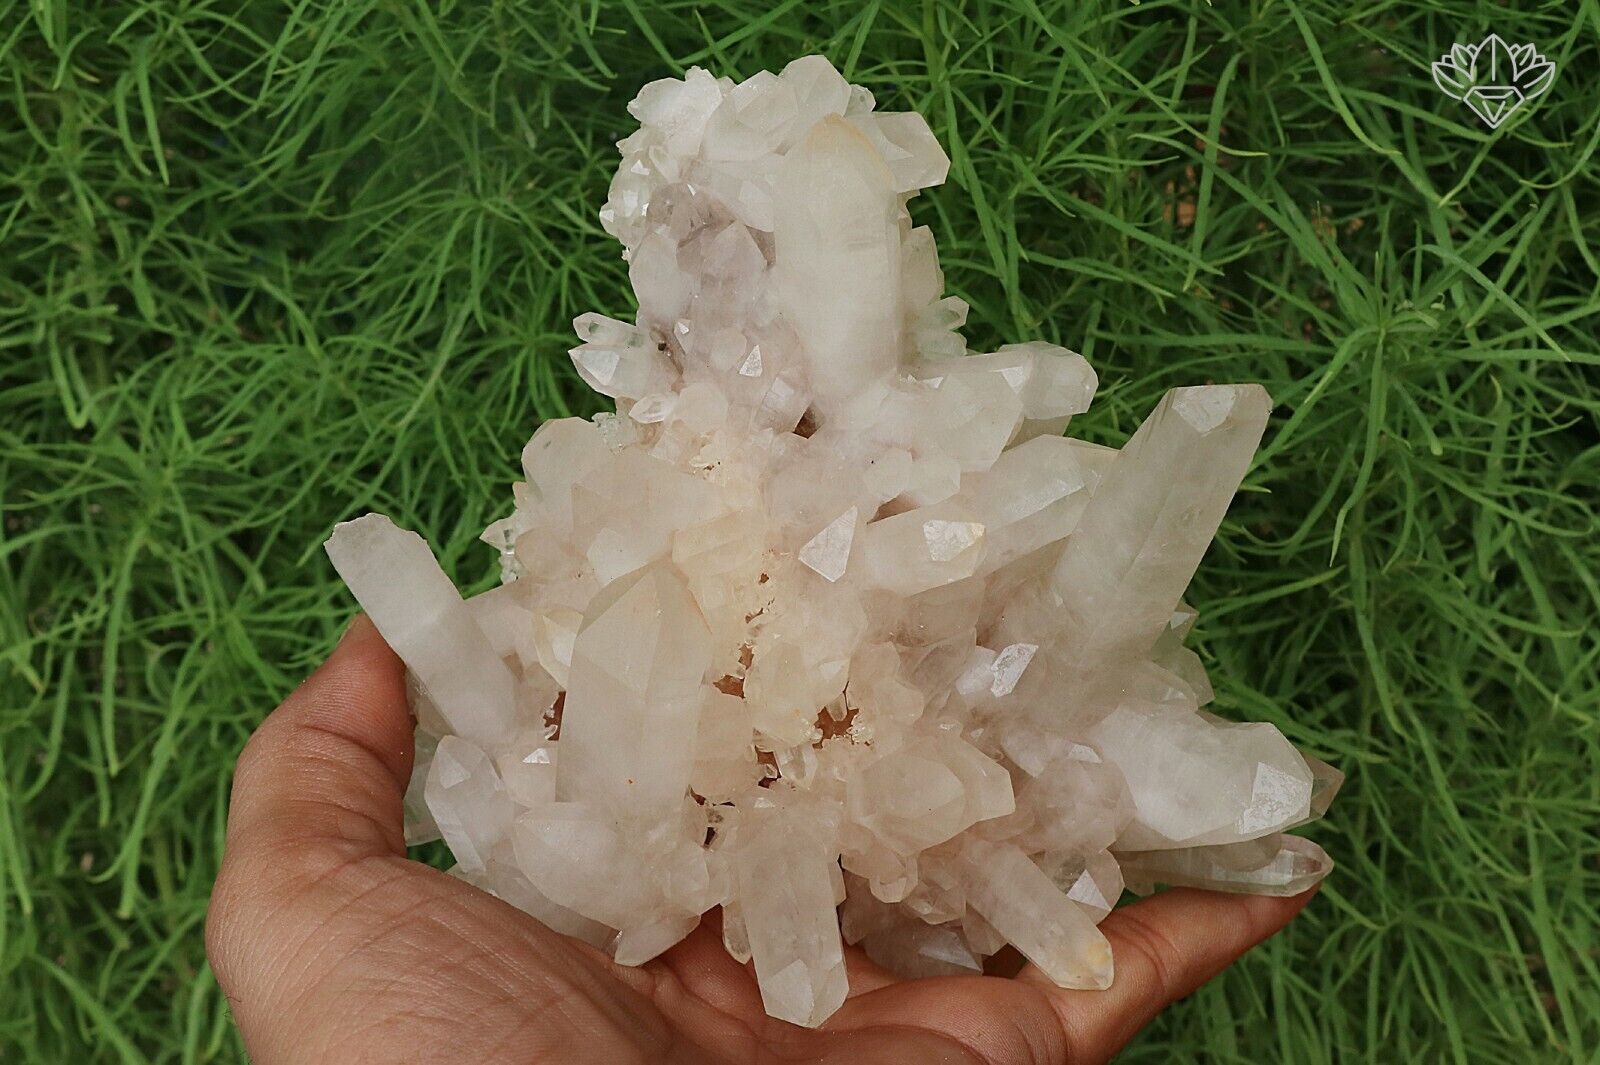 Antique Rare White Himalayan Crystal Quartz Rough Specimen 675 Gms Home Decor